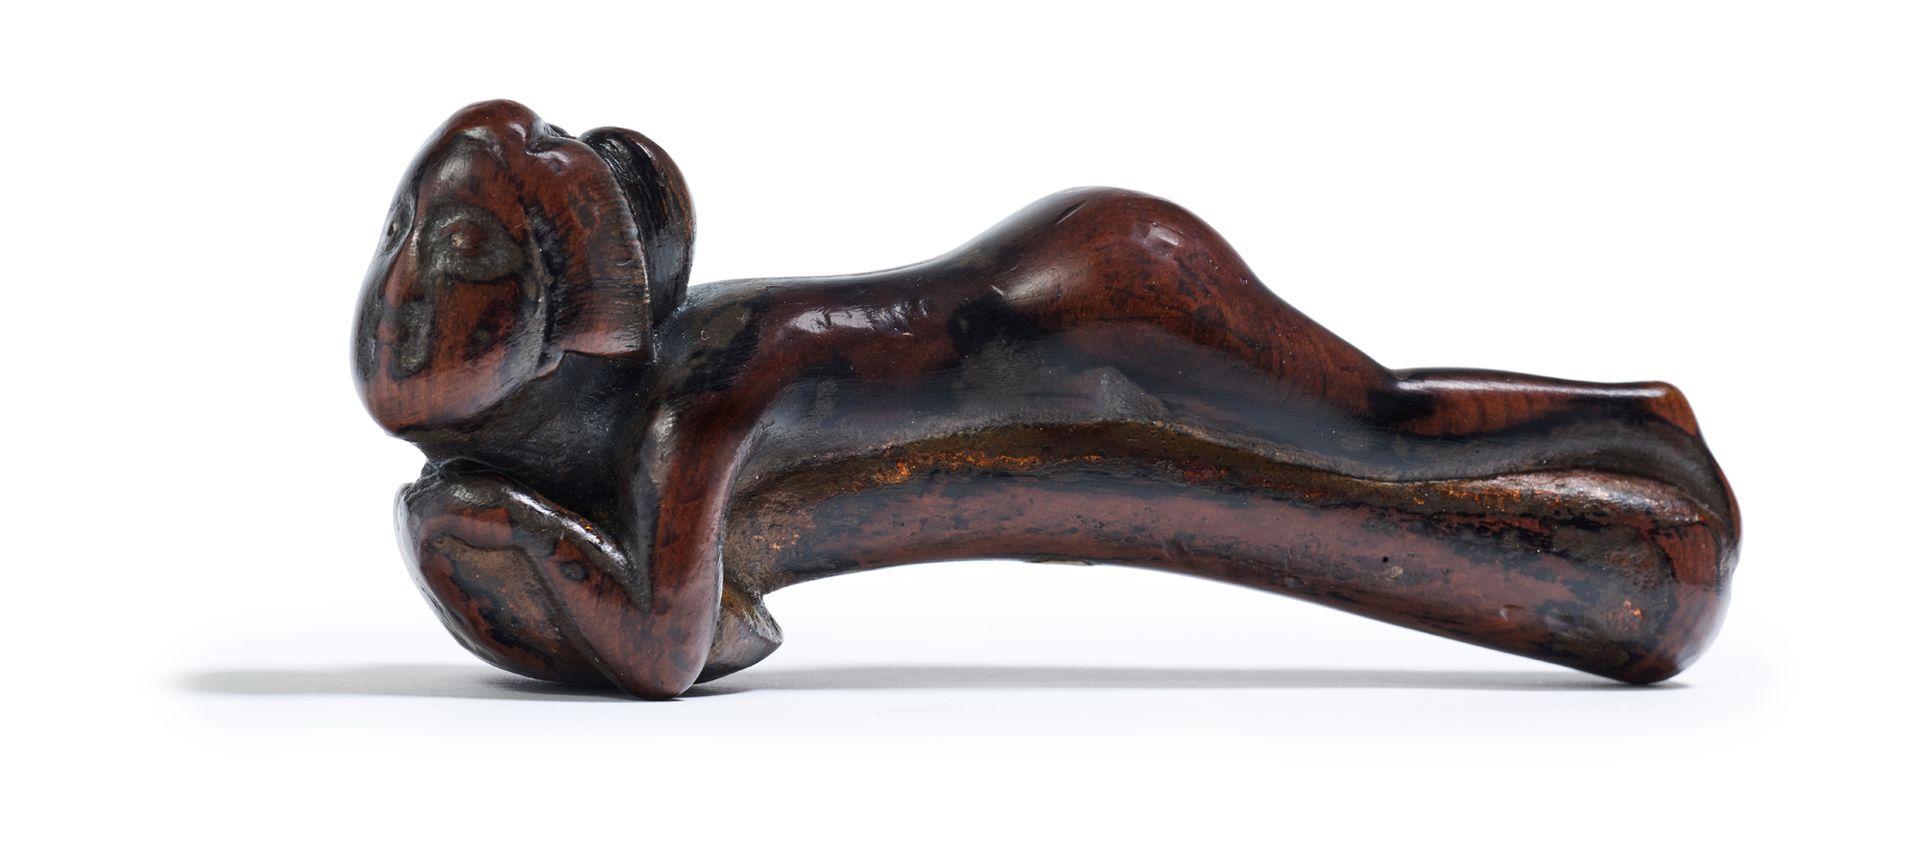 JAPON - Epoque EDO (1603 - 1868) Gran netsuke de madera, mujer desnuda tumbada s&hellip;